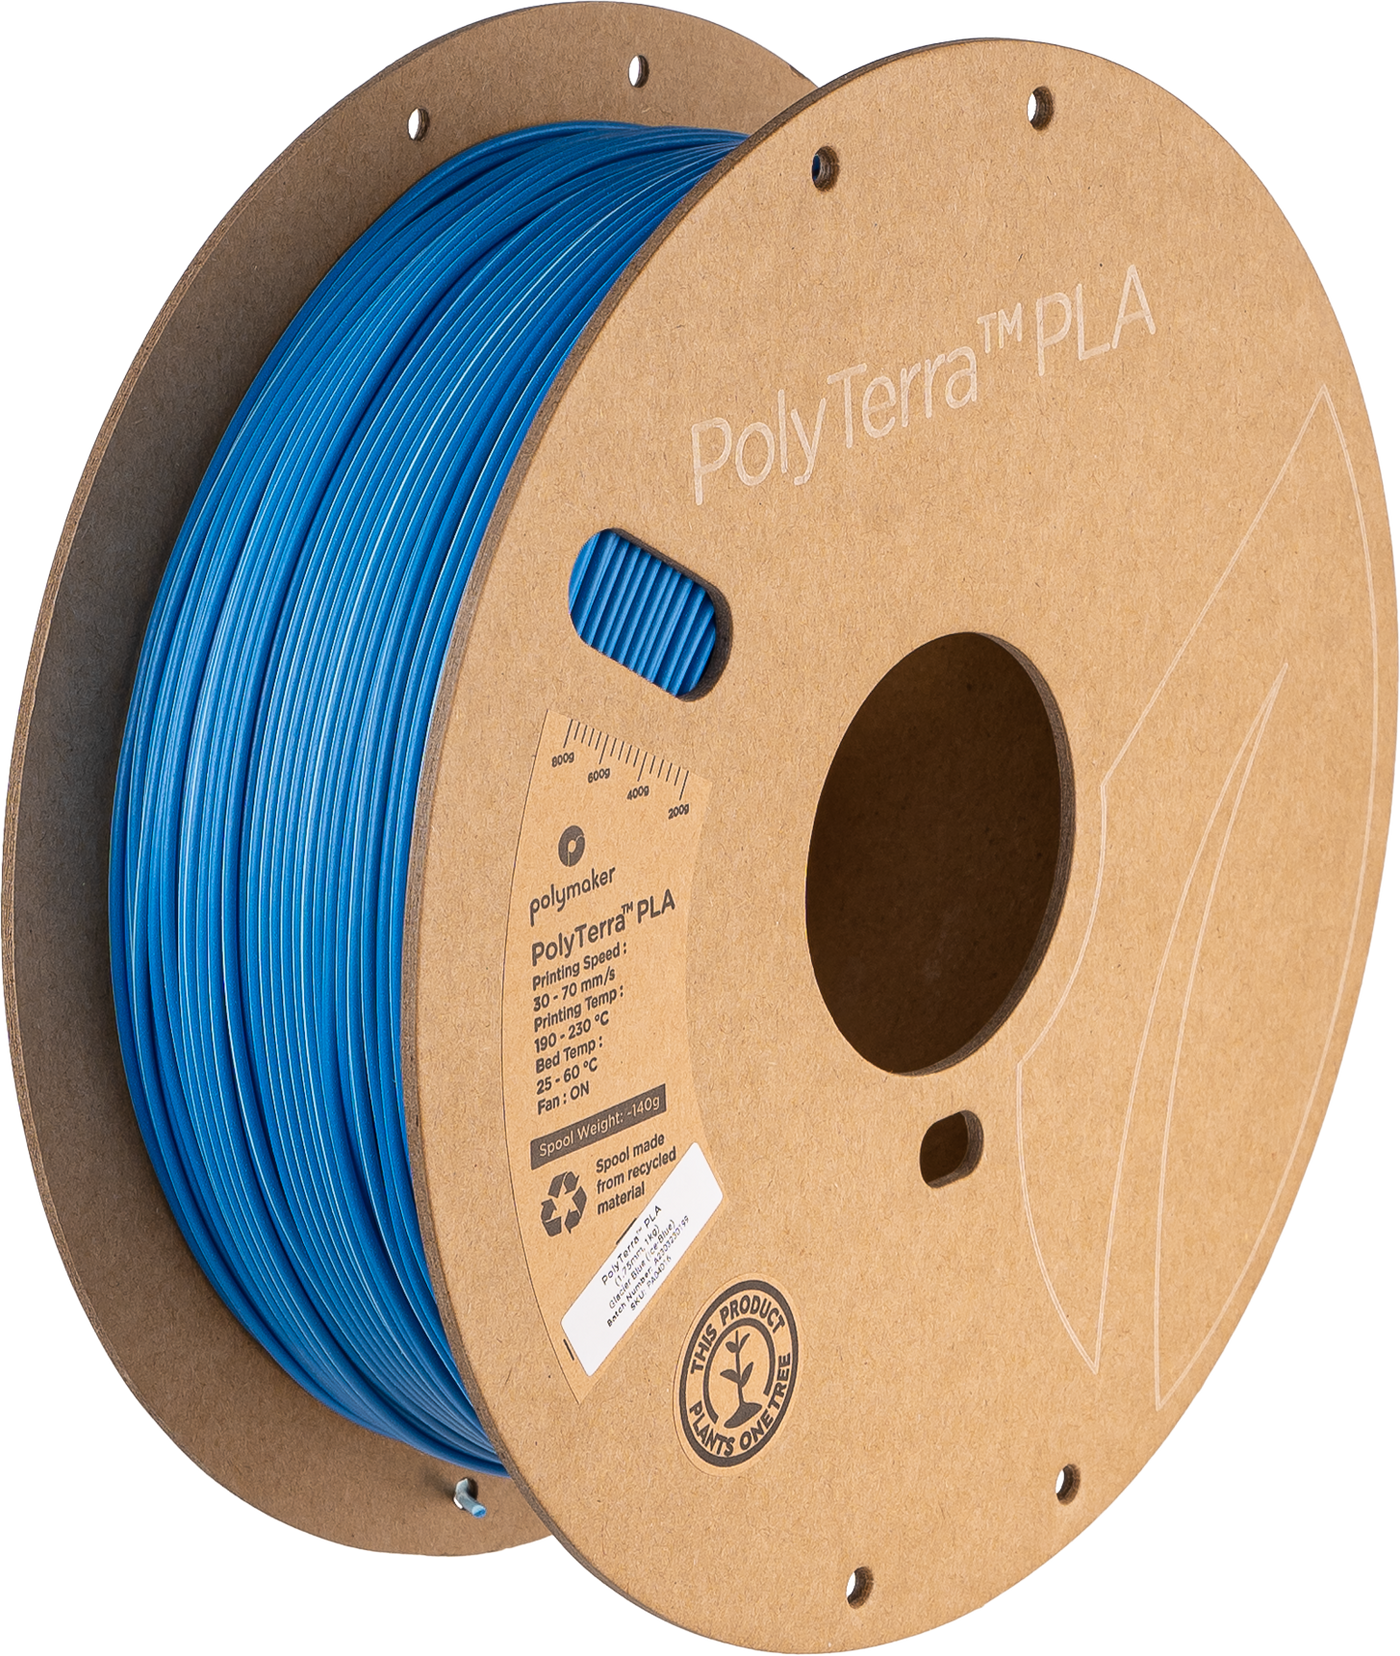 Polymaker PolyTerra PLA Filament Dual Glacier Blue Ice-Blue 1.75 mm 1KG